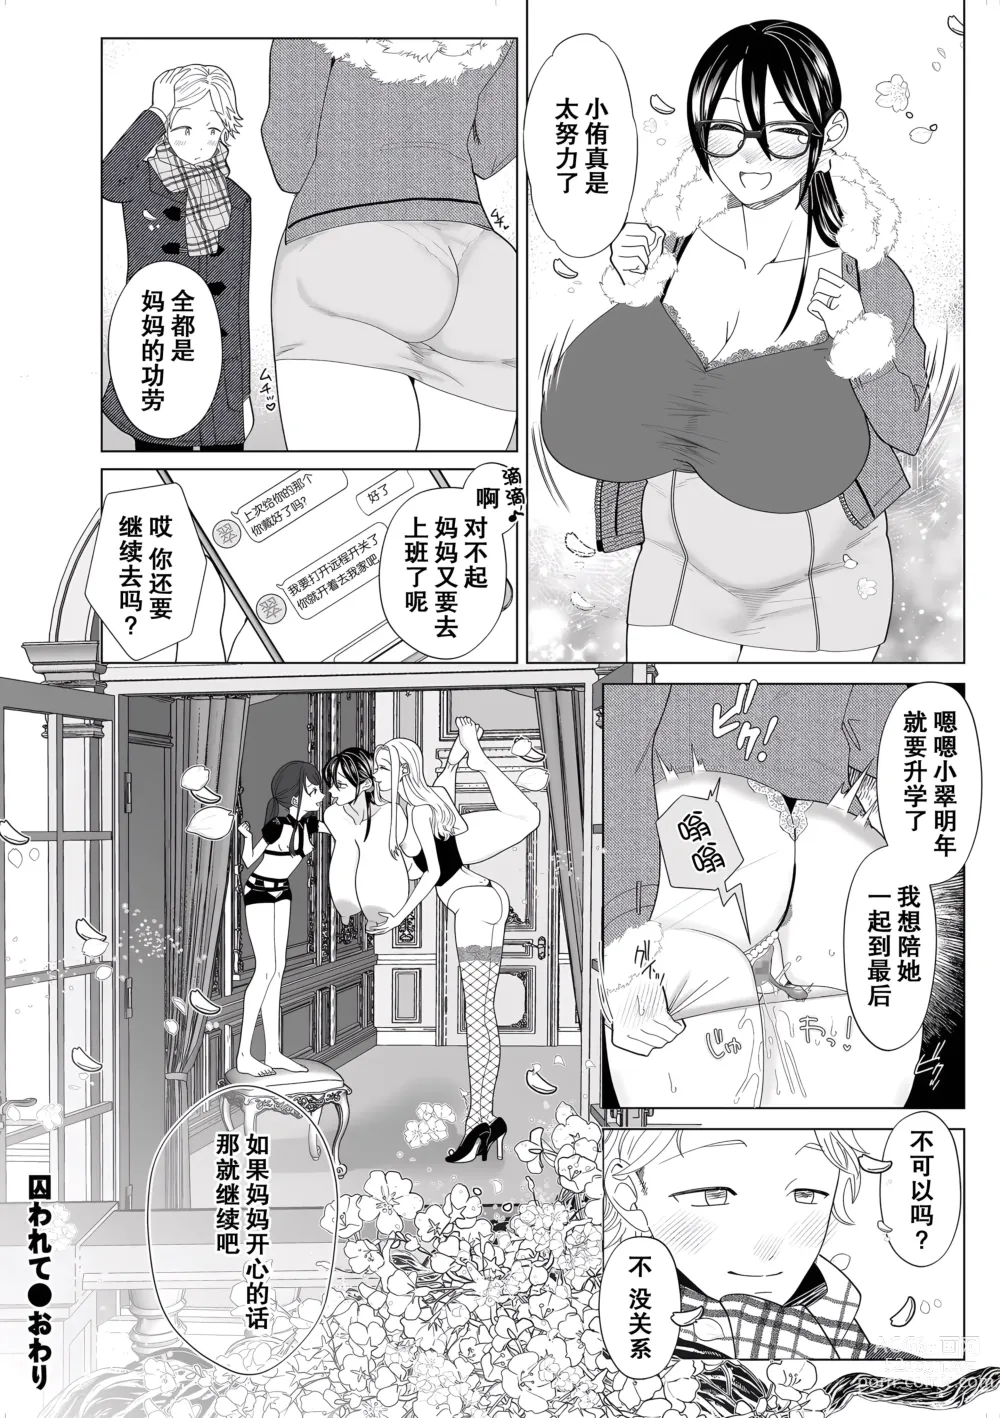 Page 27 of manga Torawarete